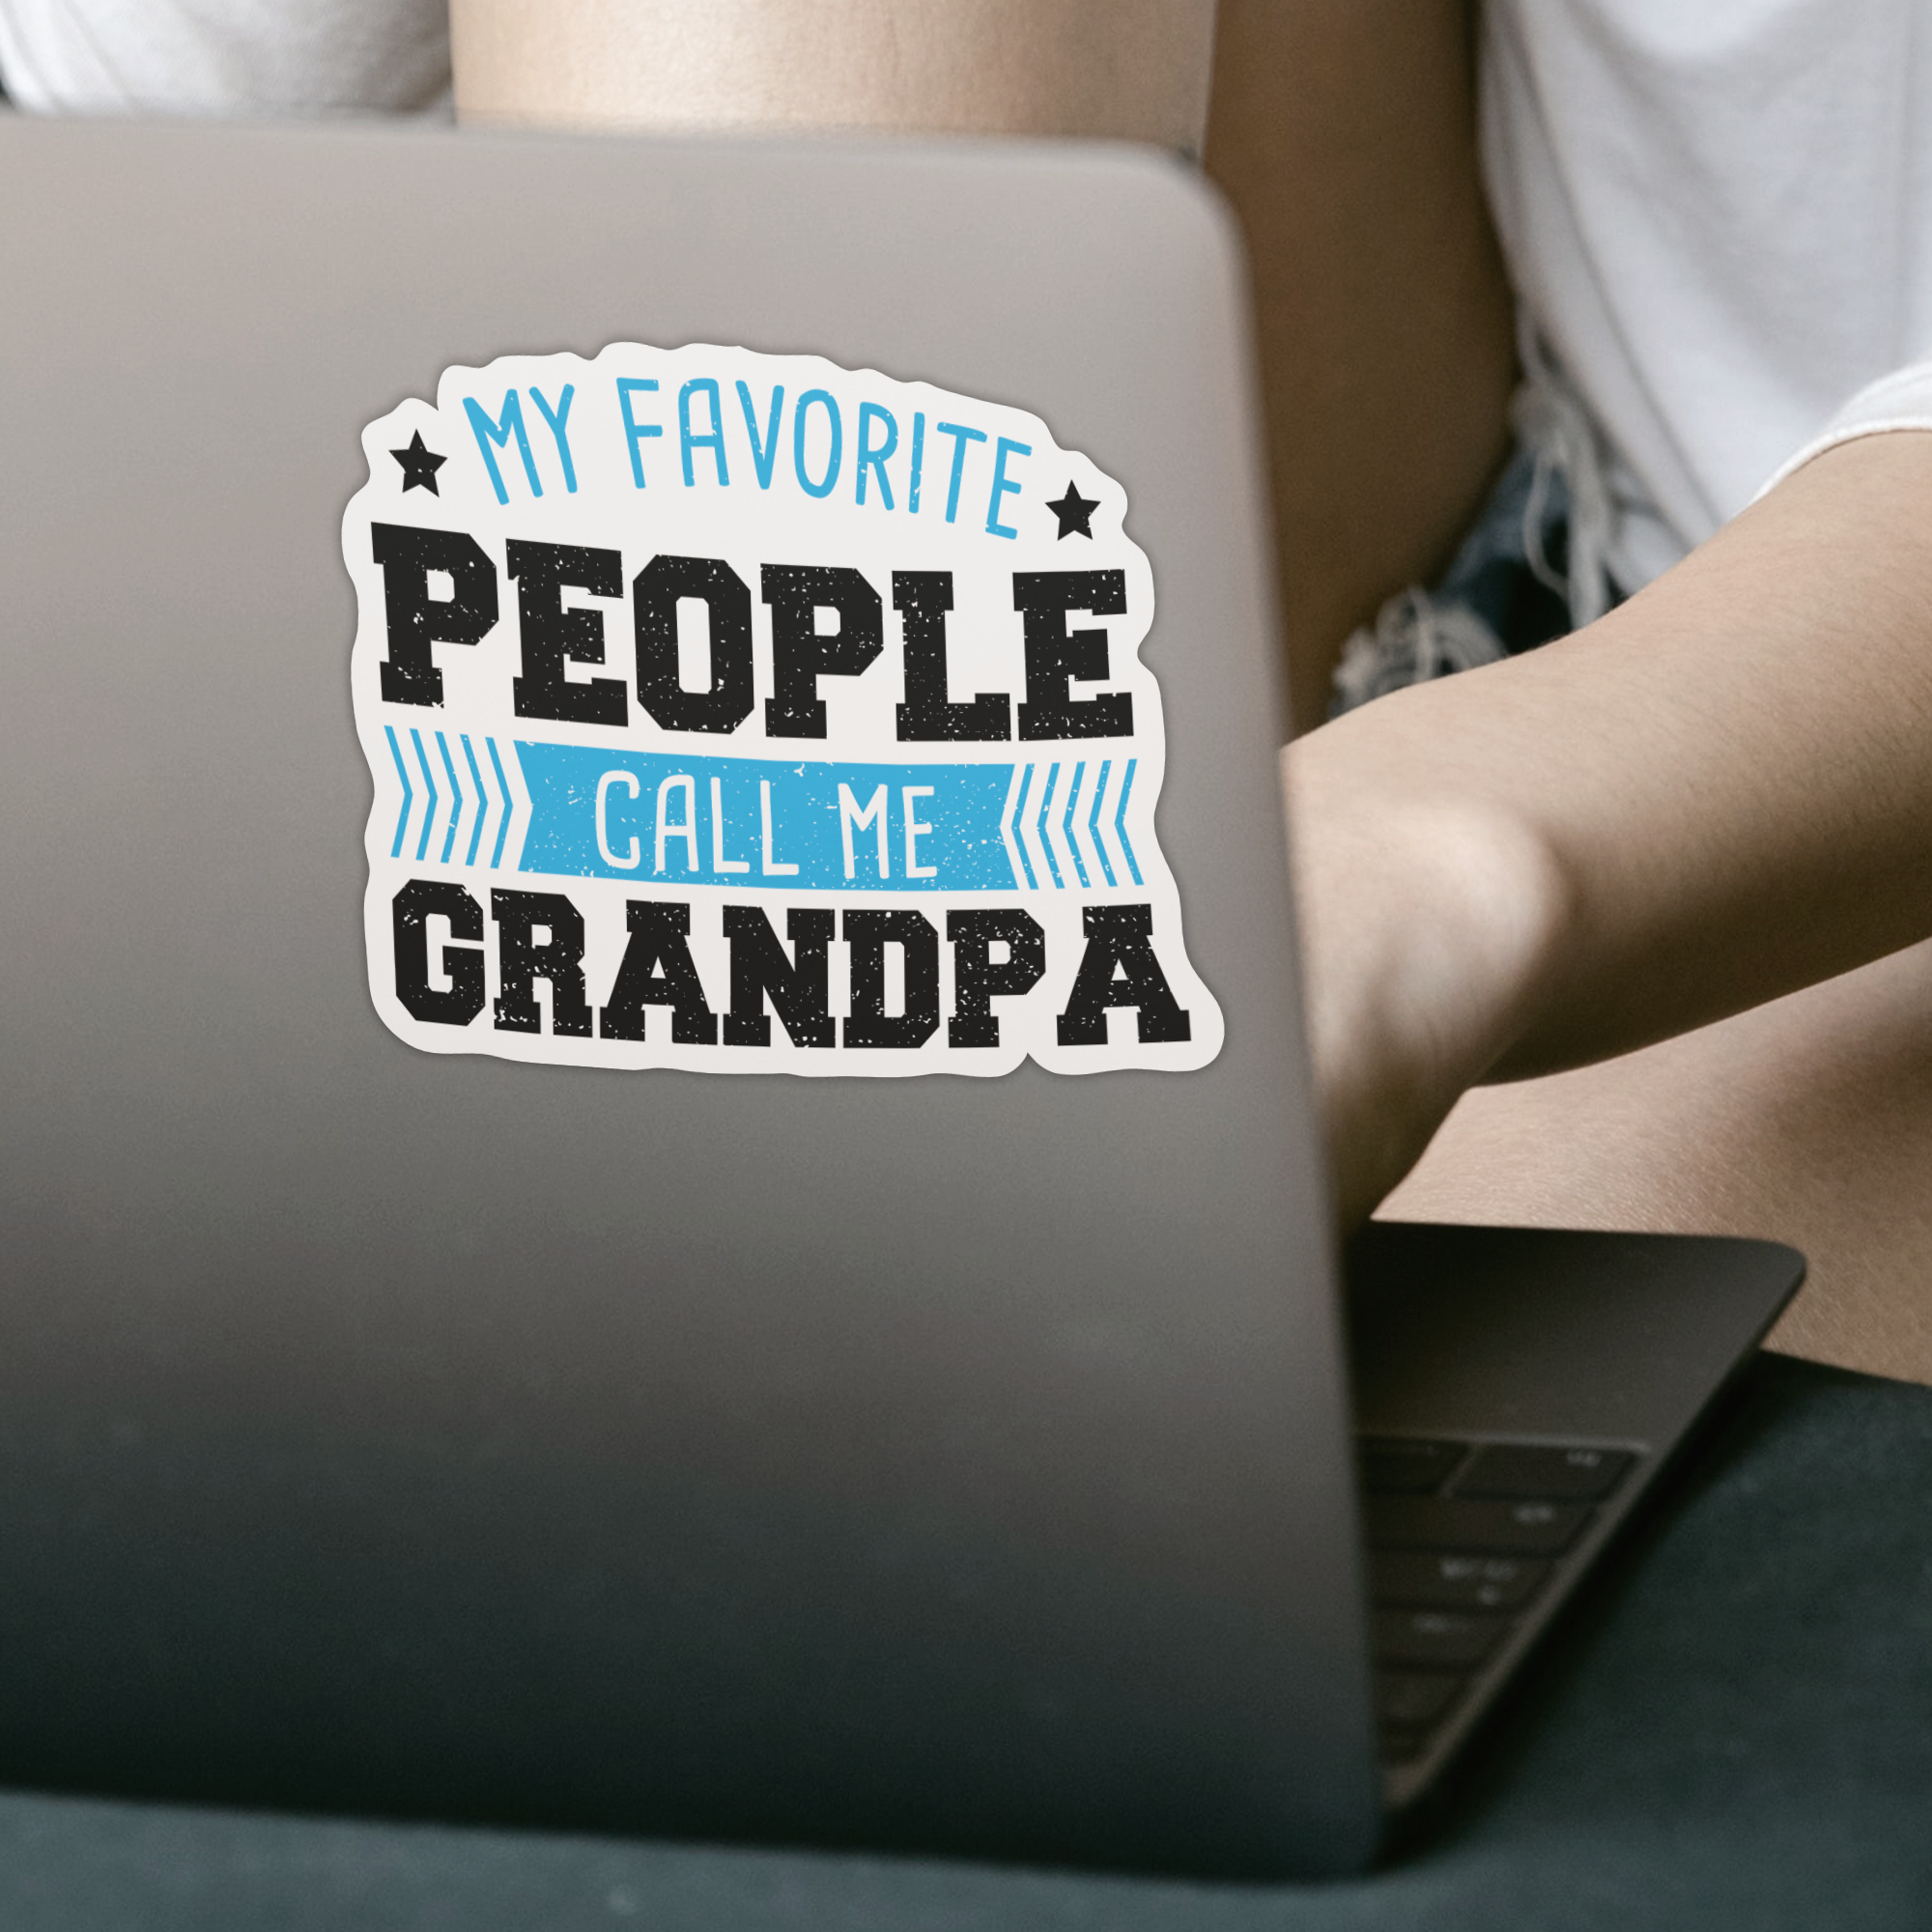 My Favorite People Call Me Grandpa Sticker - DESIGNSBYJNK5.COM